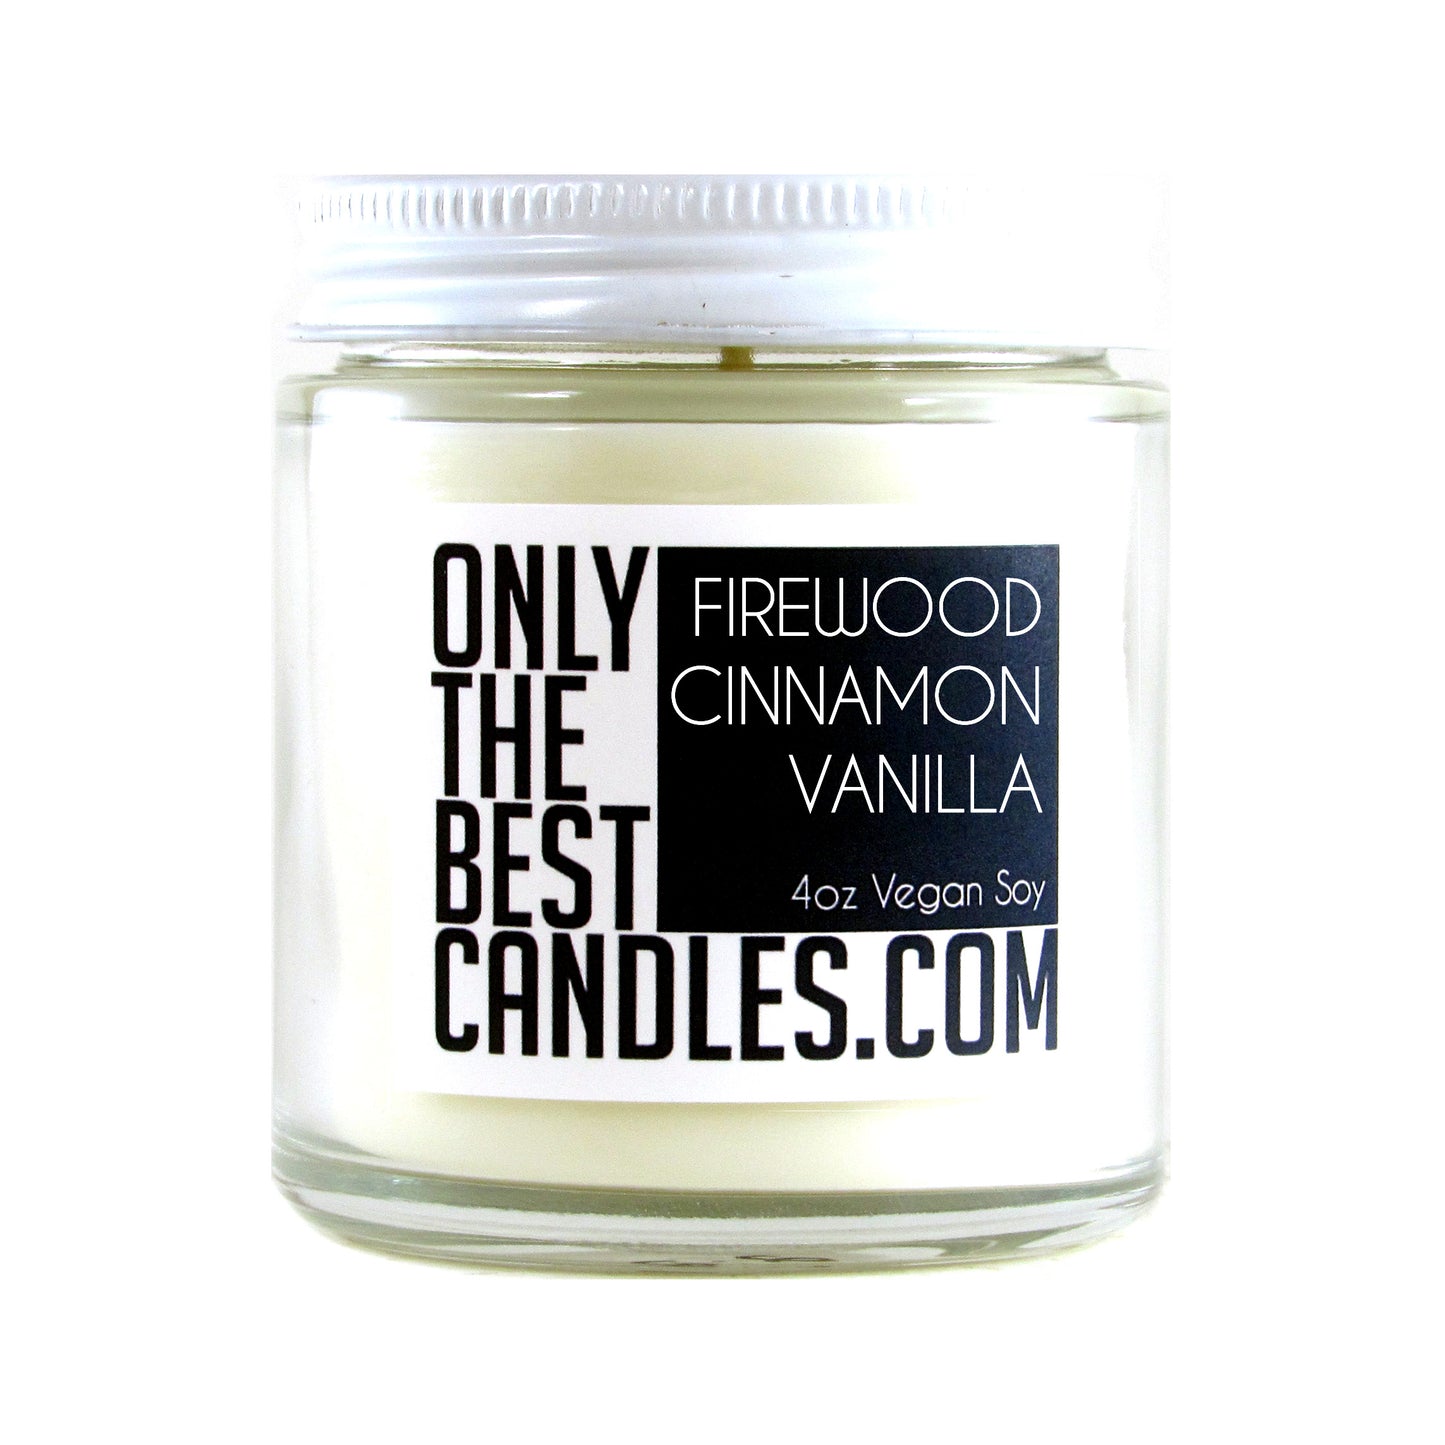 Firewood Cinnamon Vanilla 4oz Candle